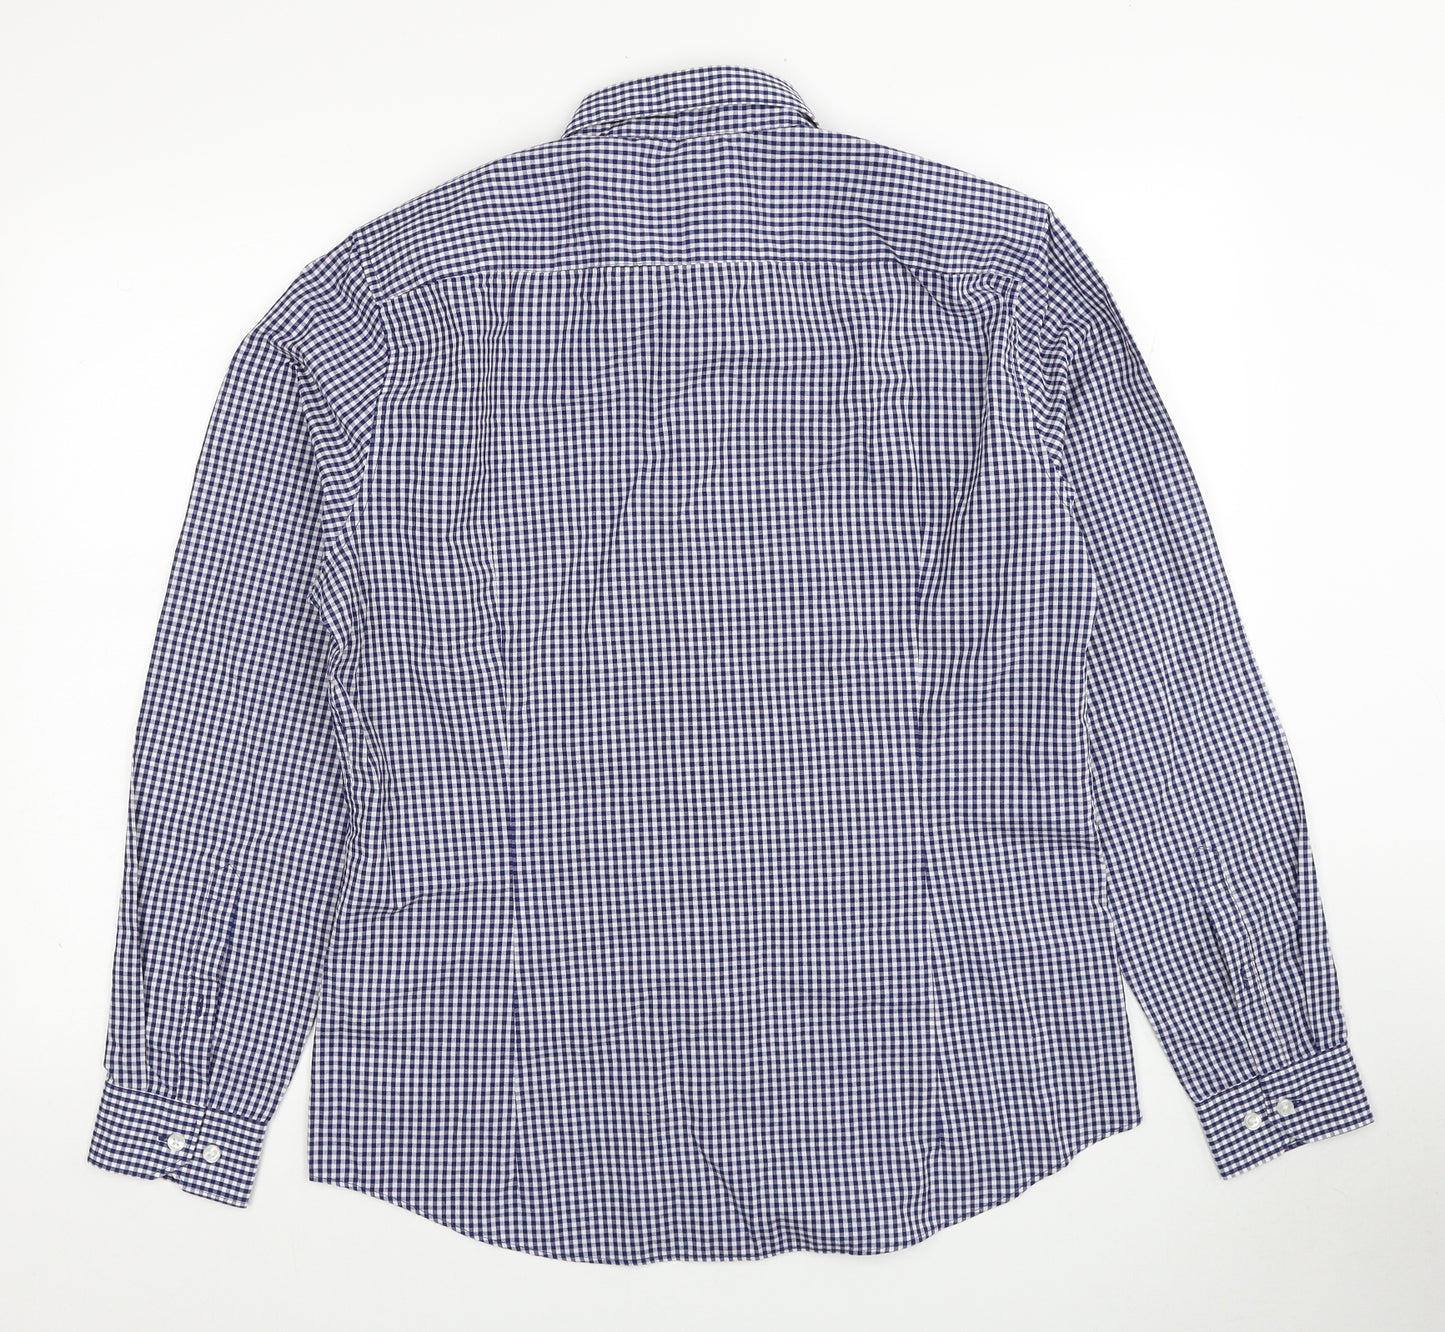 H&M Mens Blue Check Cotton Button-Up Size L Collared Button